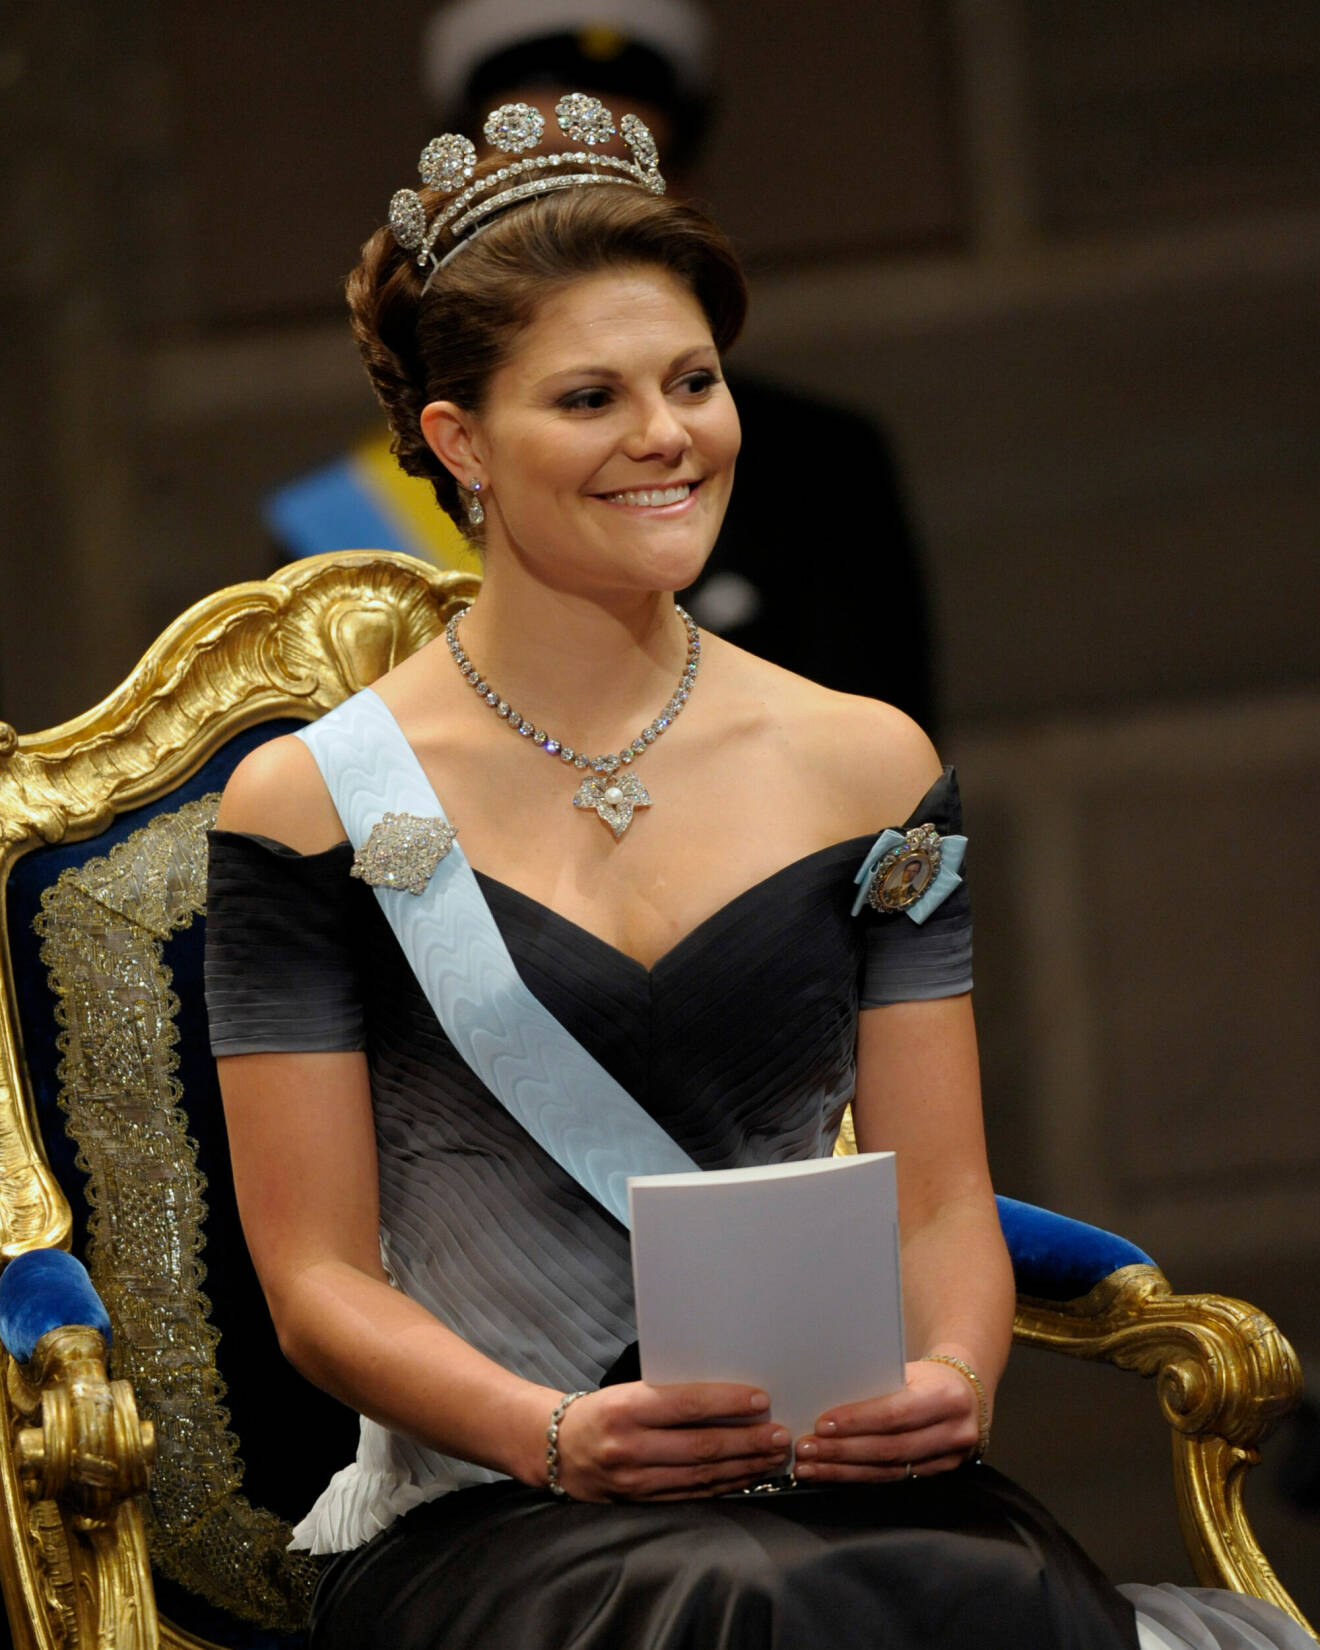 kronprinsessan nobel 2007